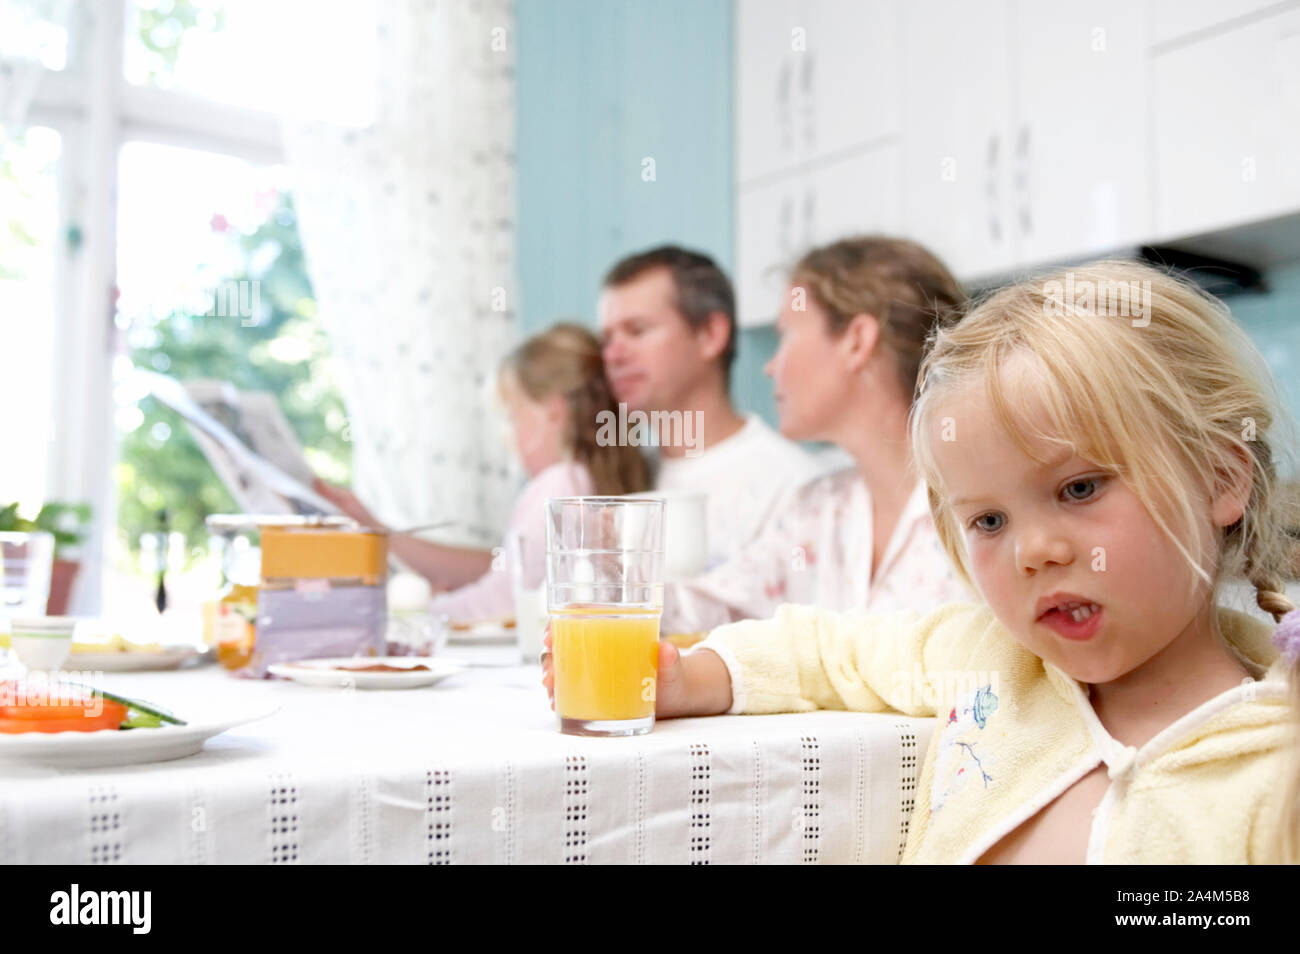 Family breakfast - little thoughtful girl drinking orange juice. Stock Photo